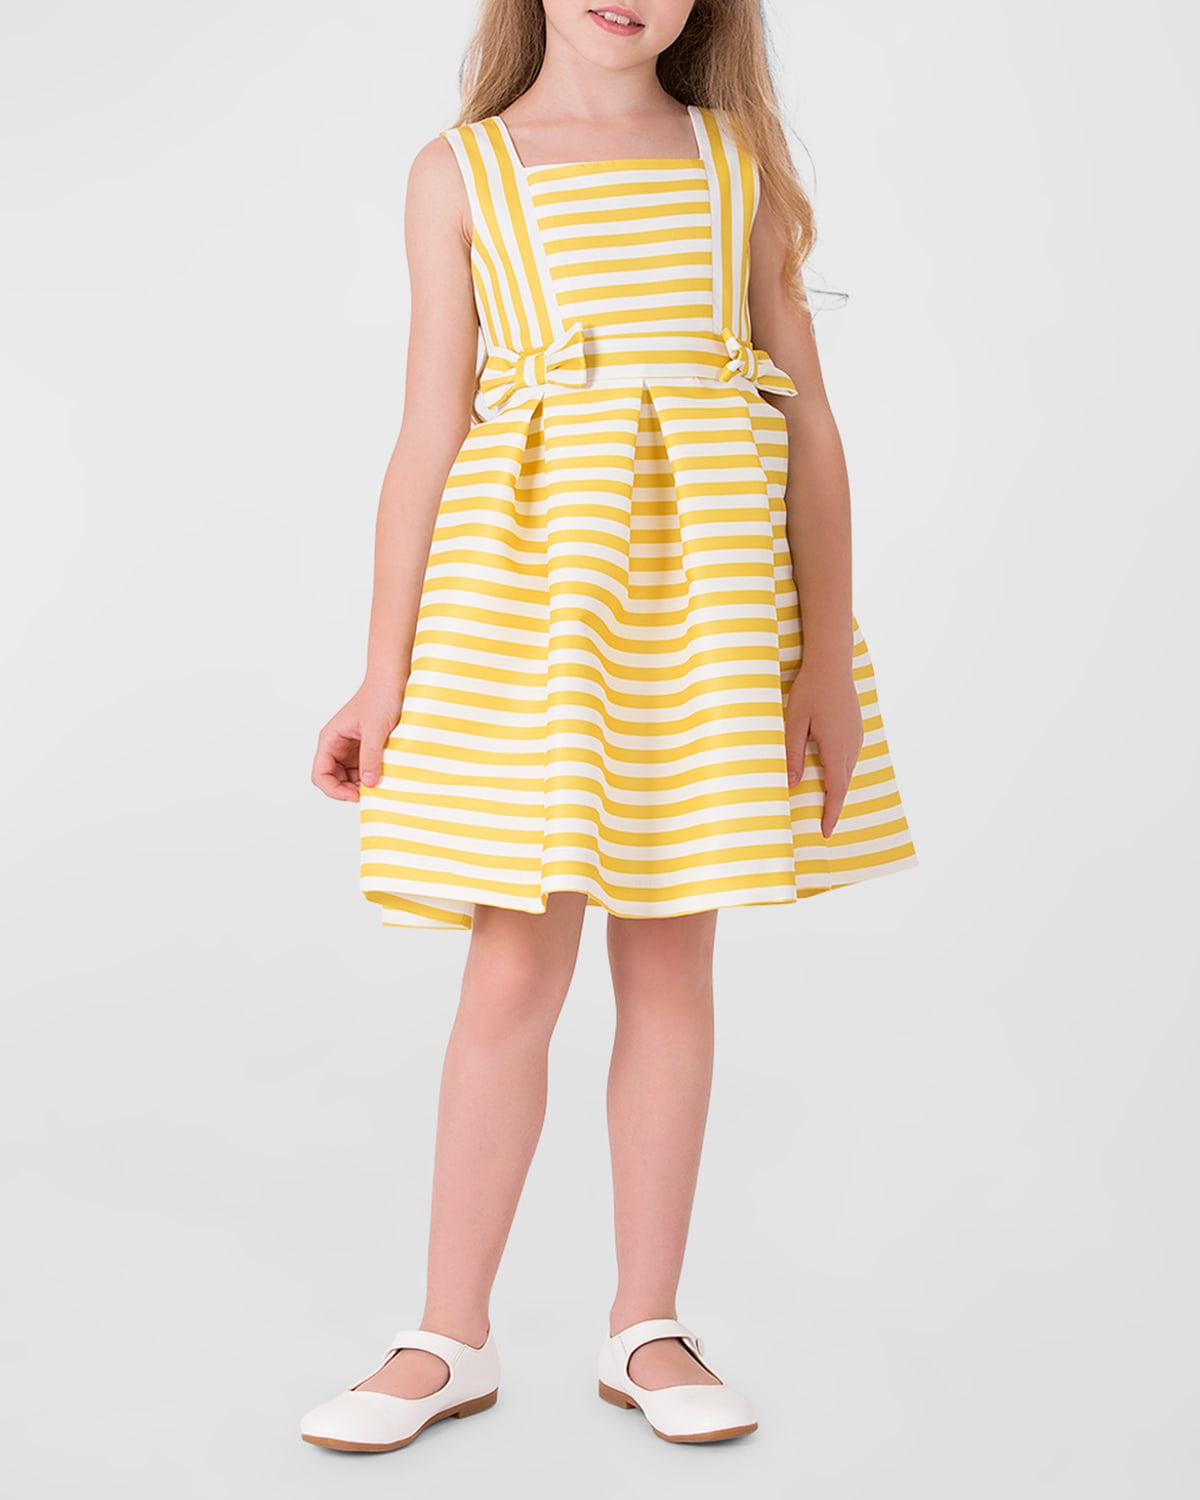 Mama Luma Kids' Girl's Striped Bow Dress In Yellow Stripes